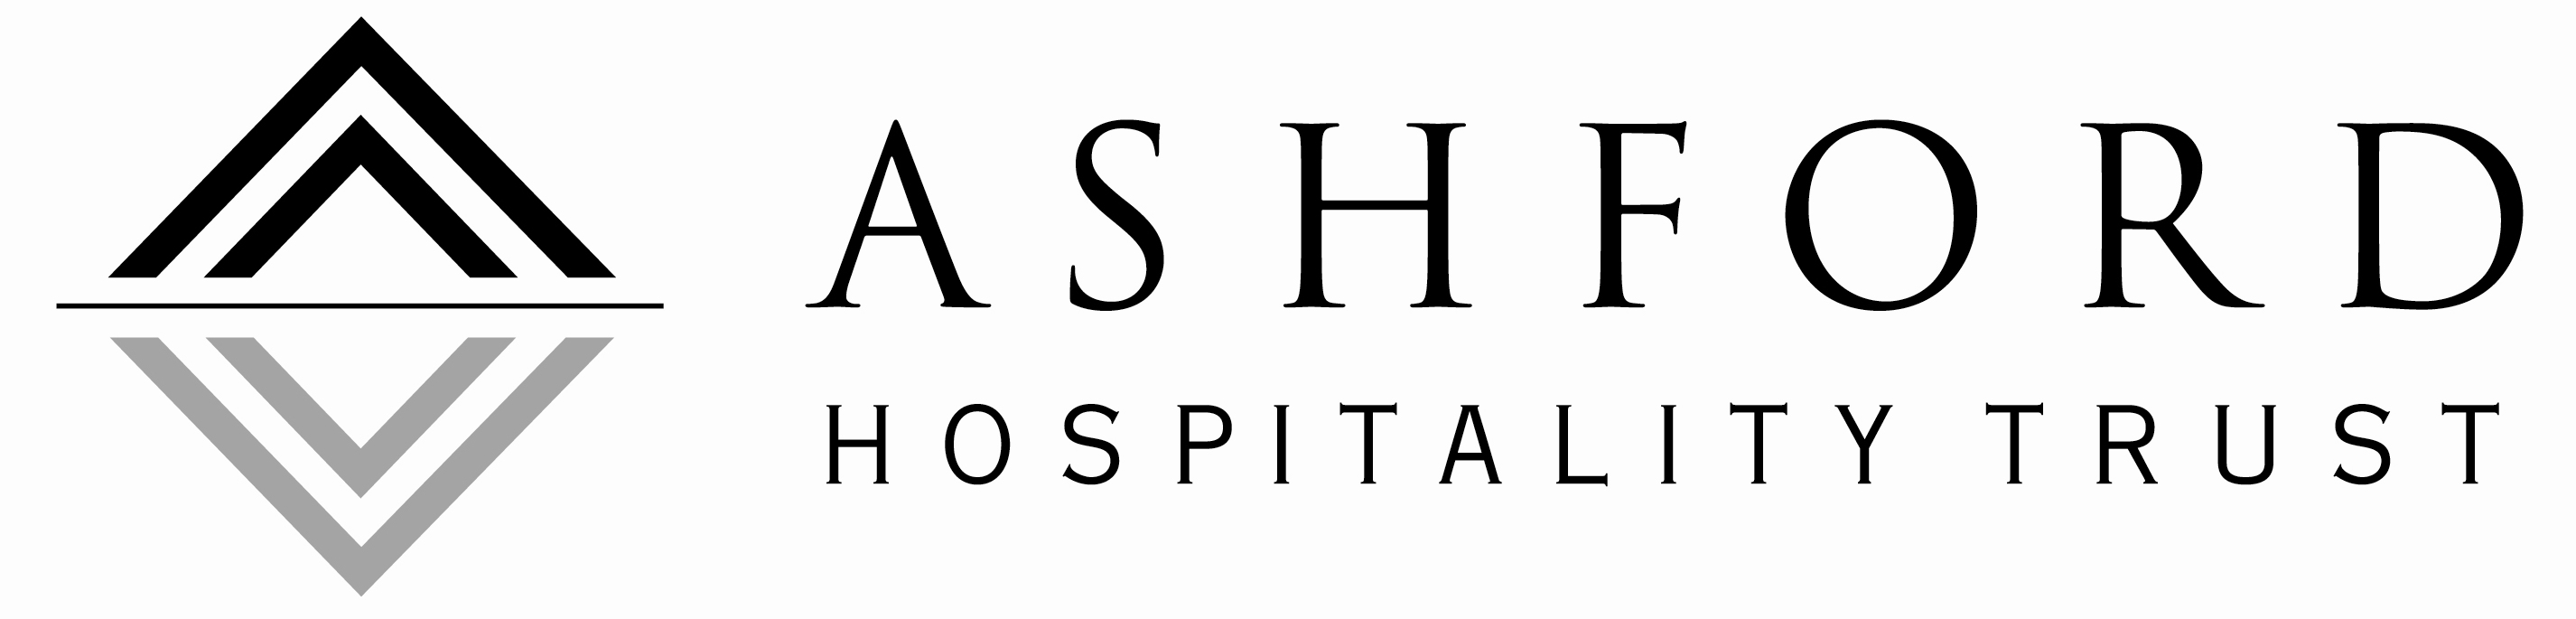 Ashford Hospitality Trust